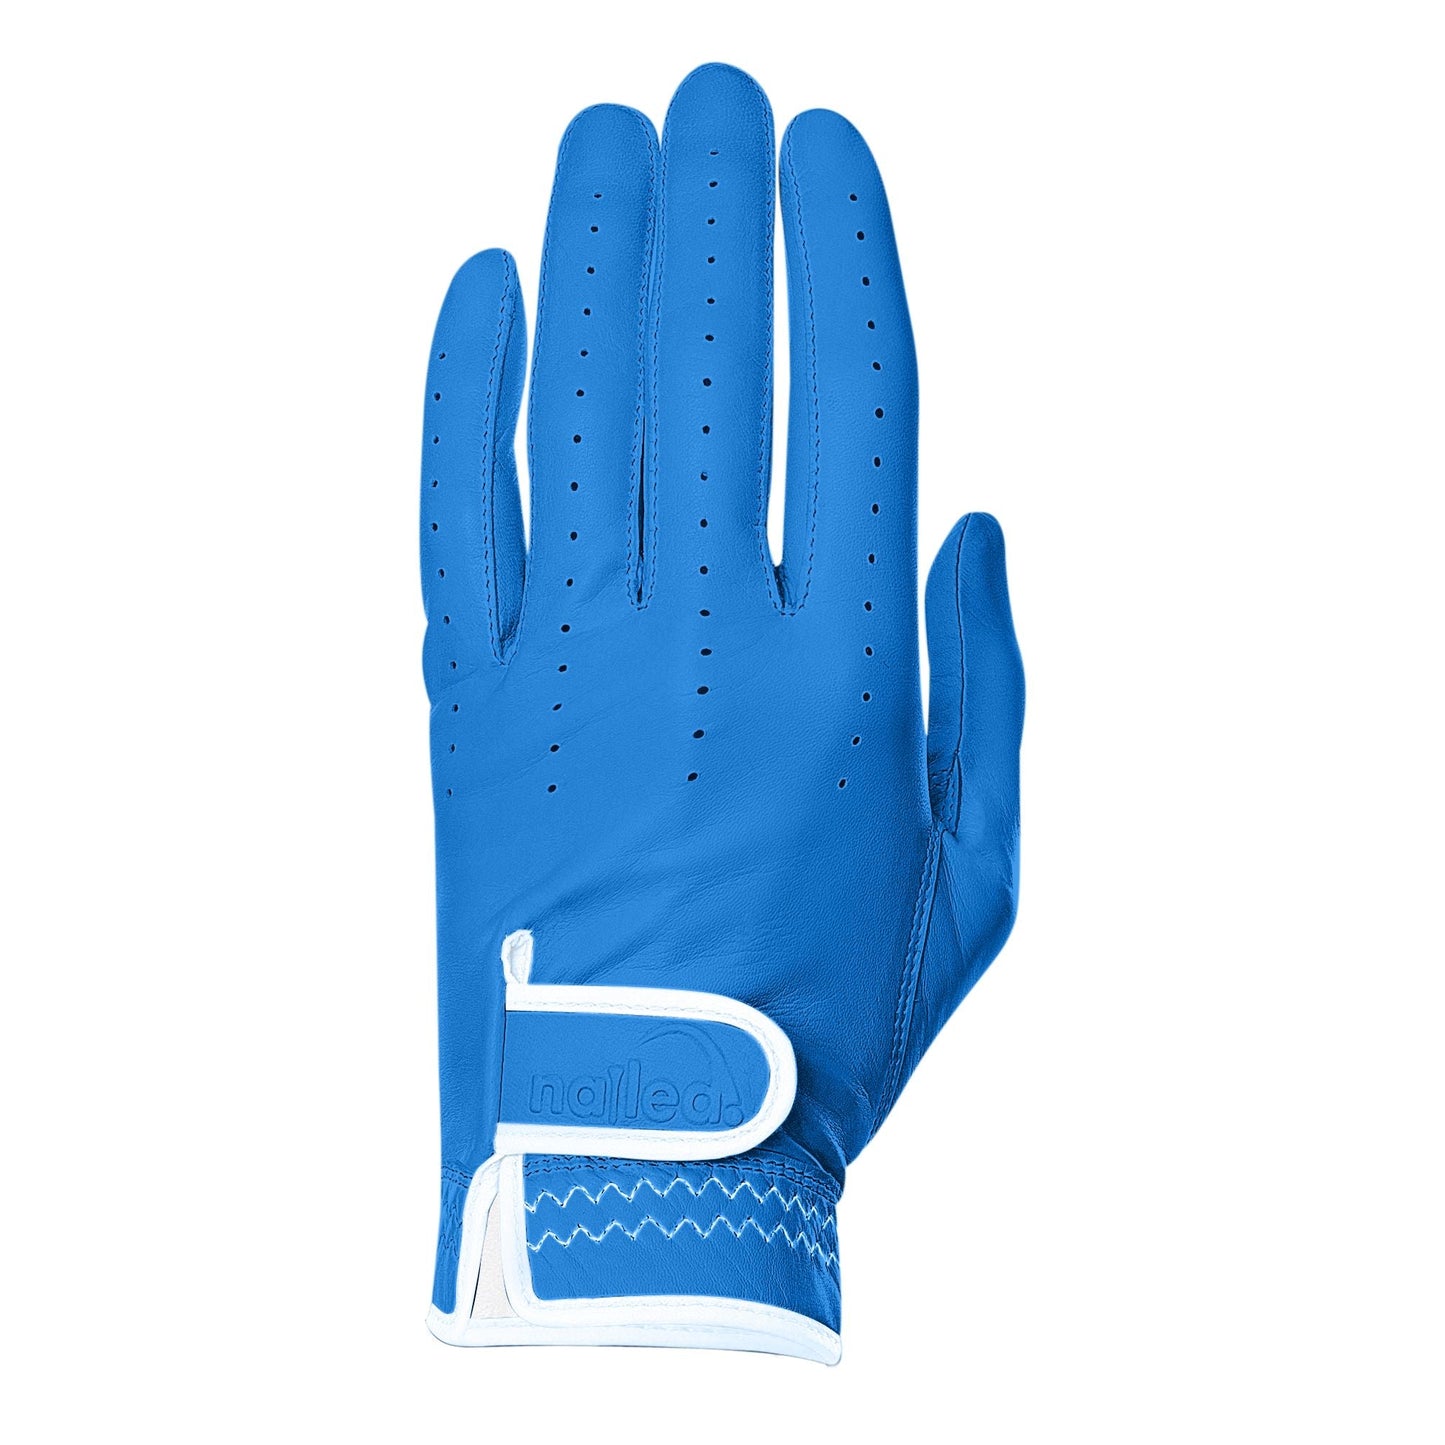 Nailed Golf Premium Elongated Golf Glove